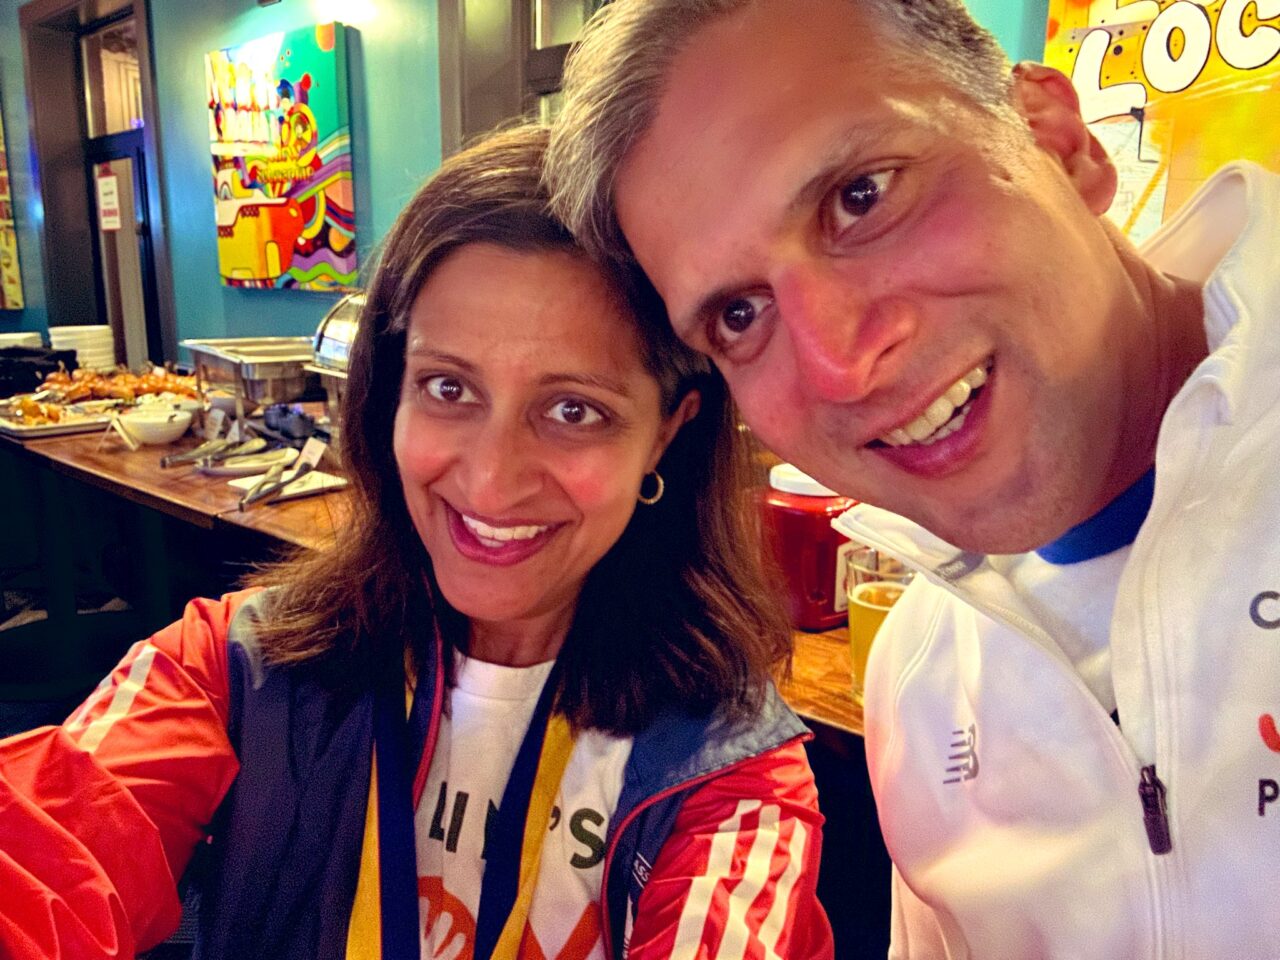 Aparna Raj Parikh: It wasn’t pretty but officially a marathoner